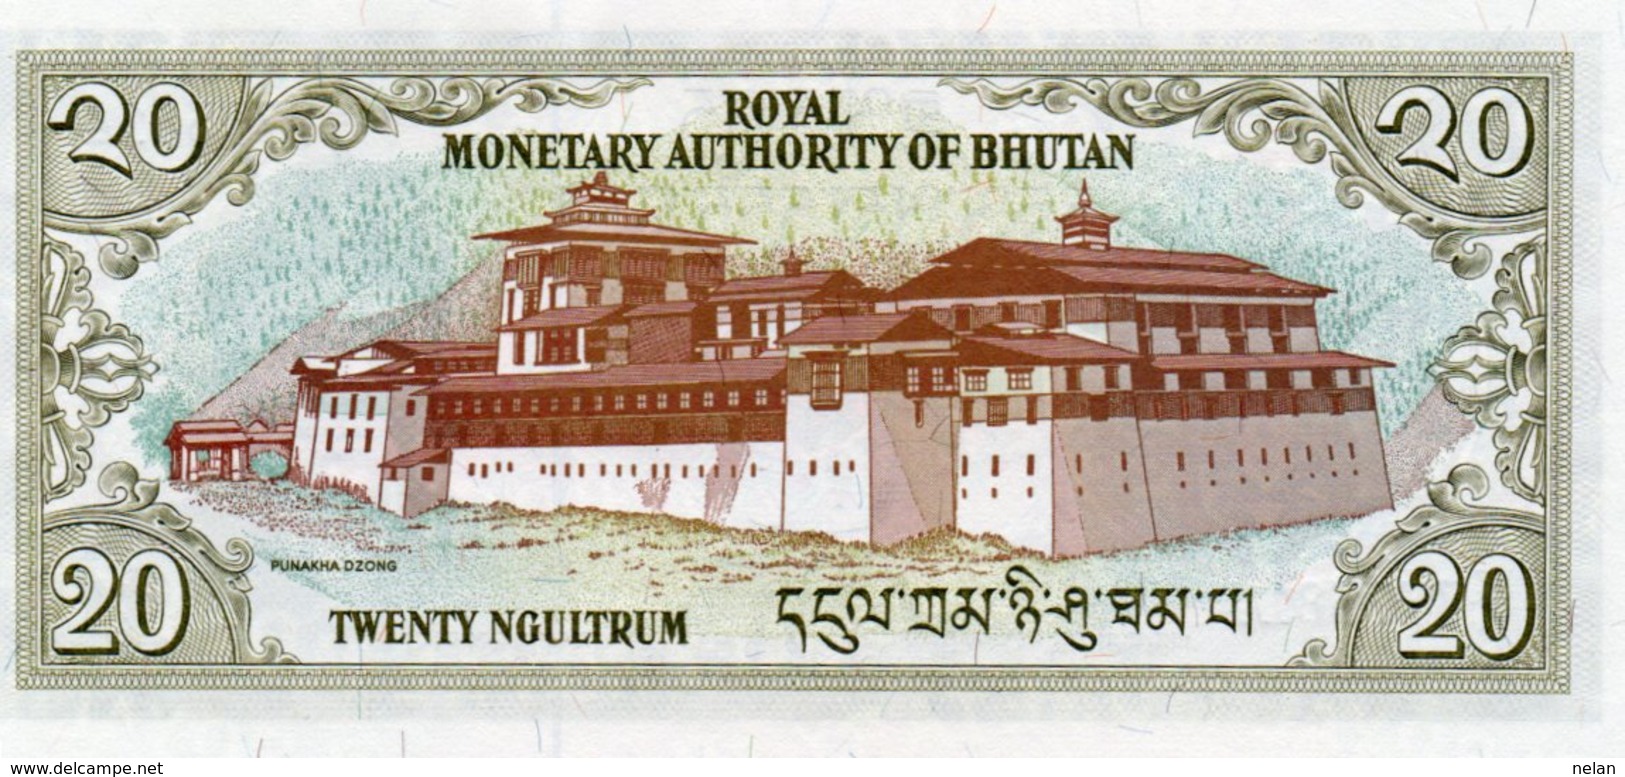 BHUTAN 20 NGULTRUM 2000 P-23 UNC - Bhutan